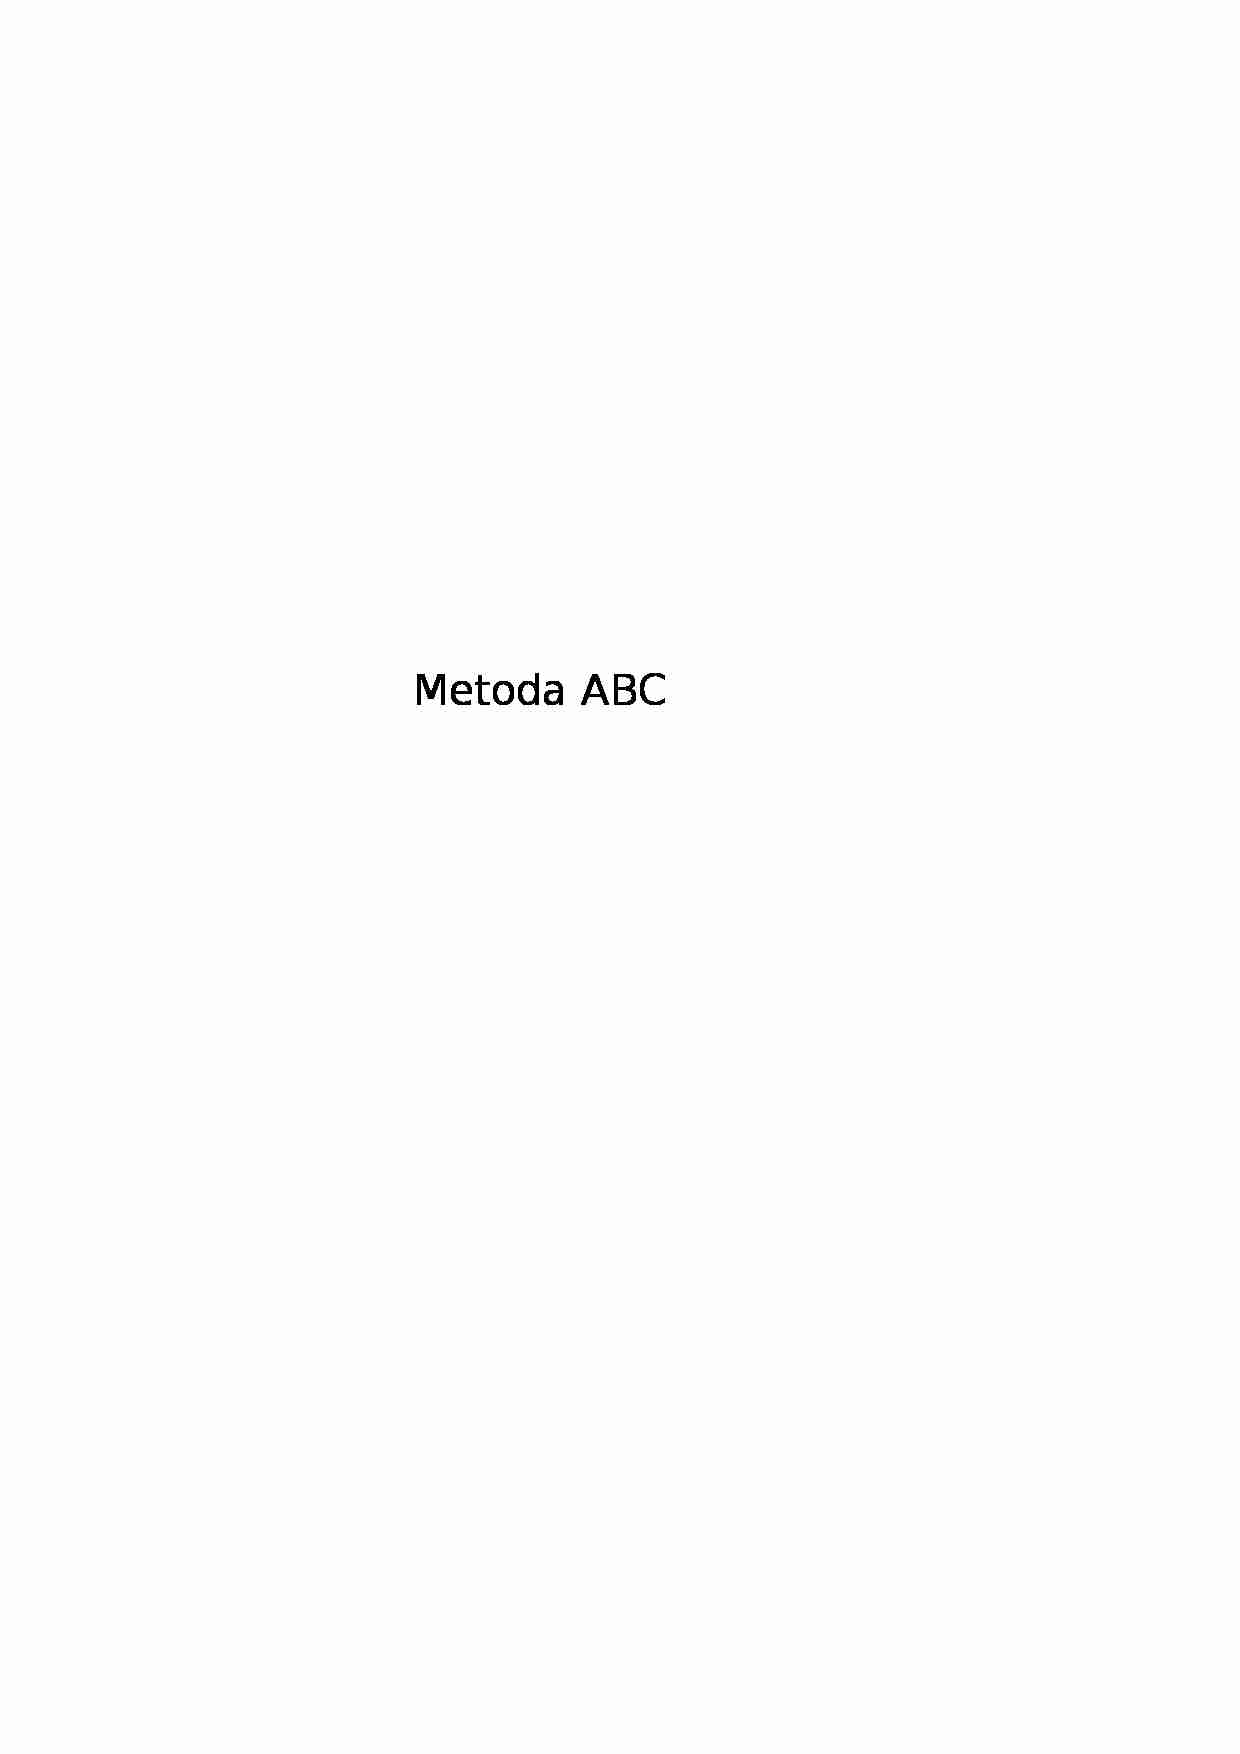 Metoda ABC - strona 1